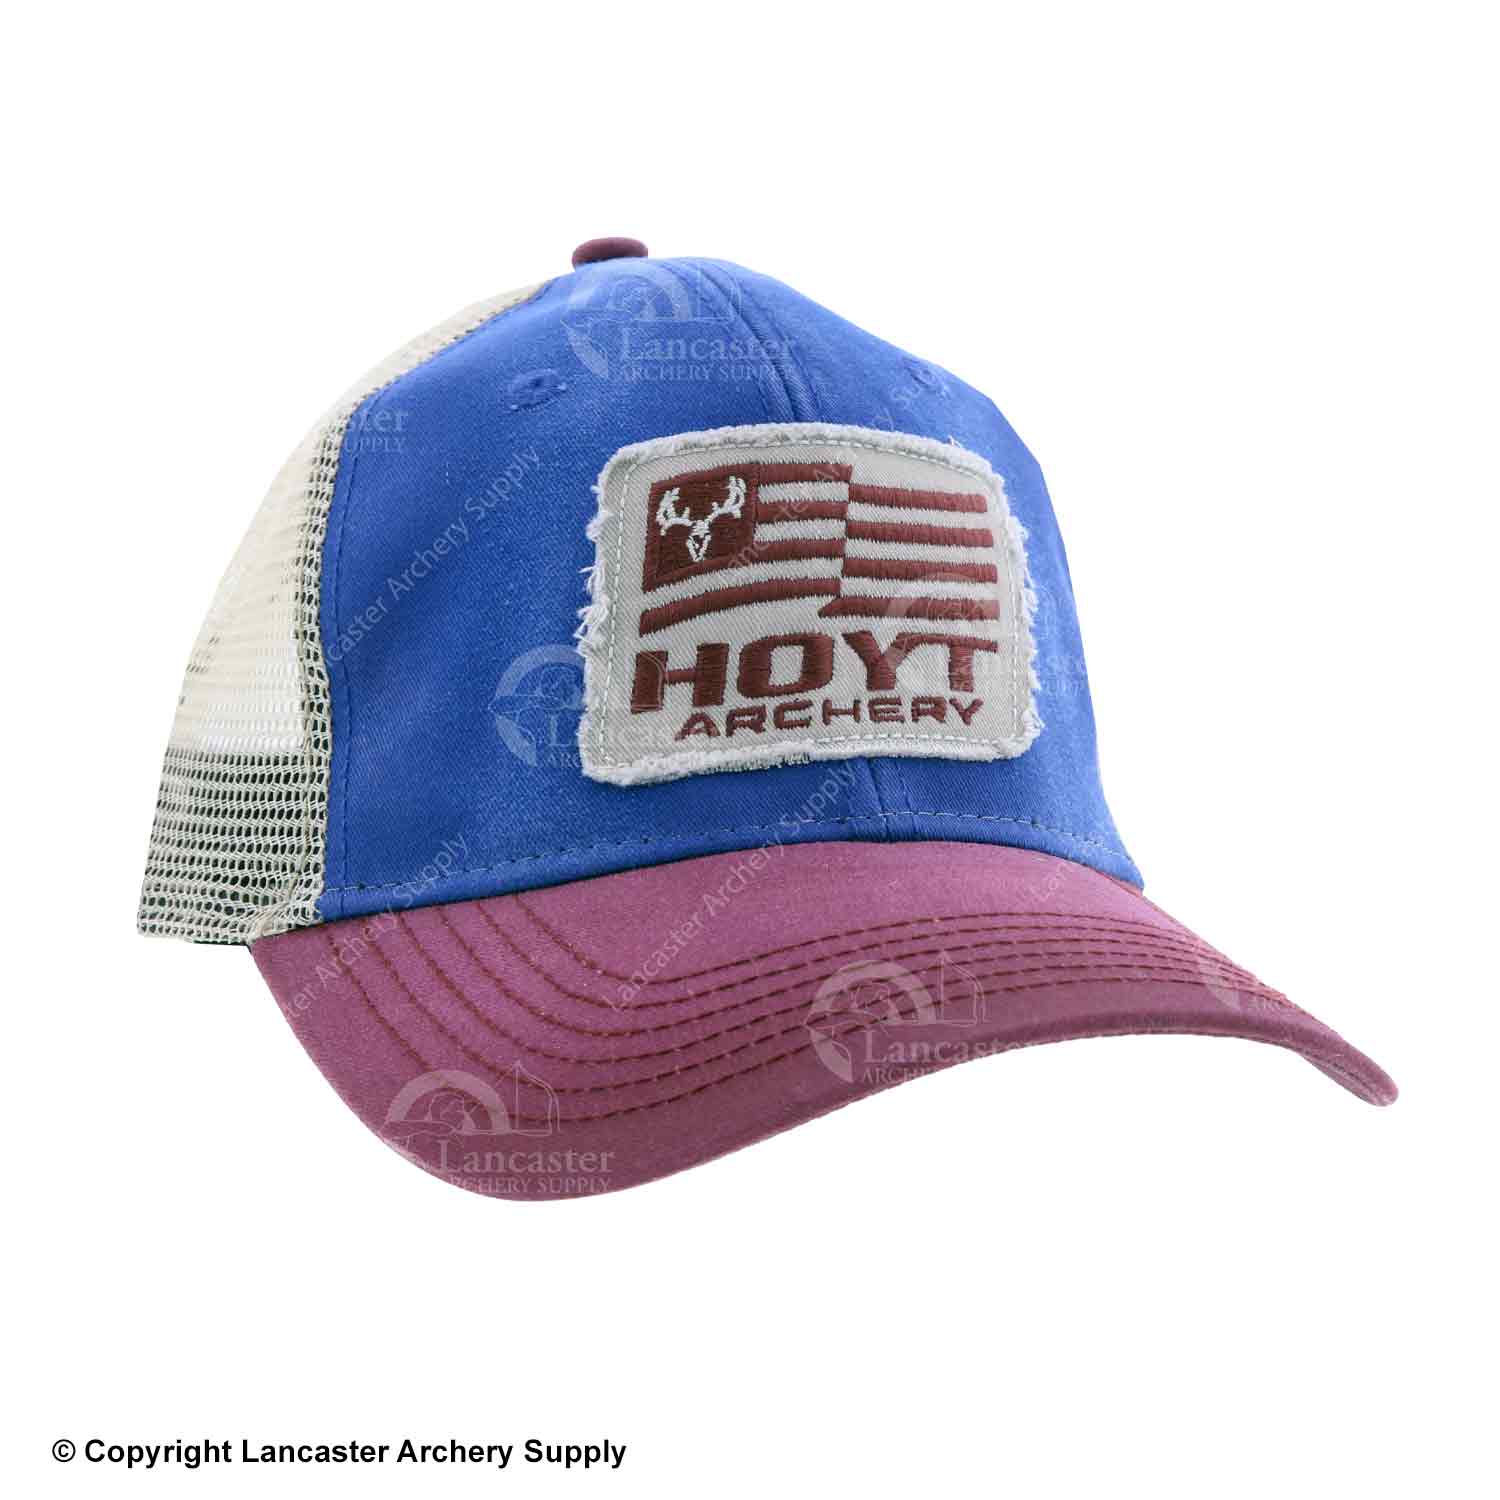 Hoyt Flag Patch Hat